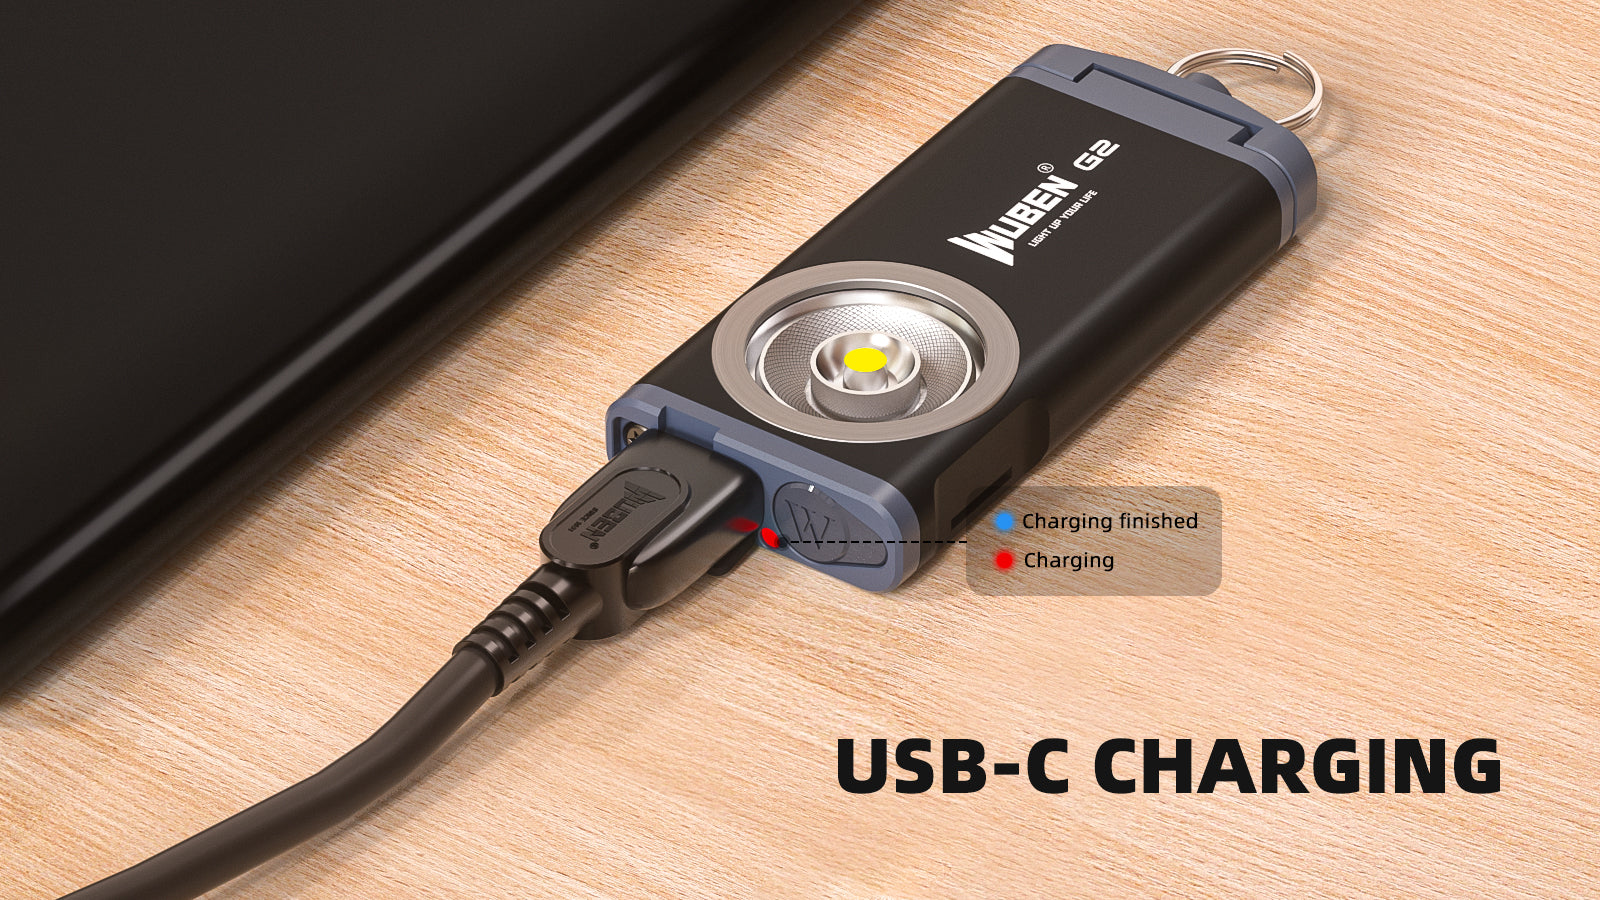 USB-C CHARGING